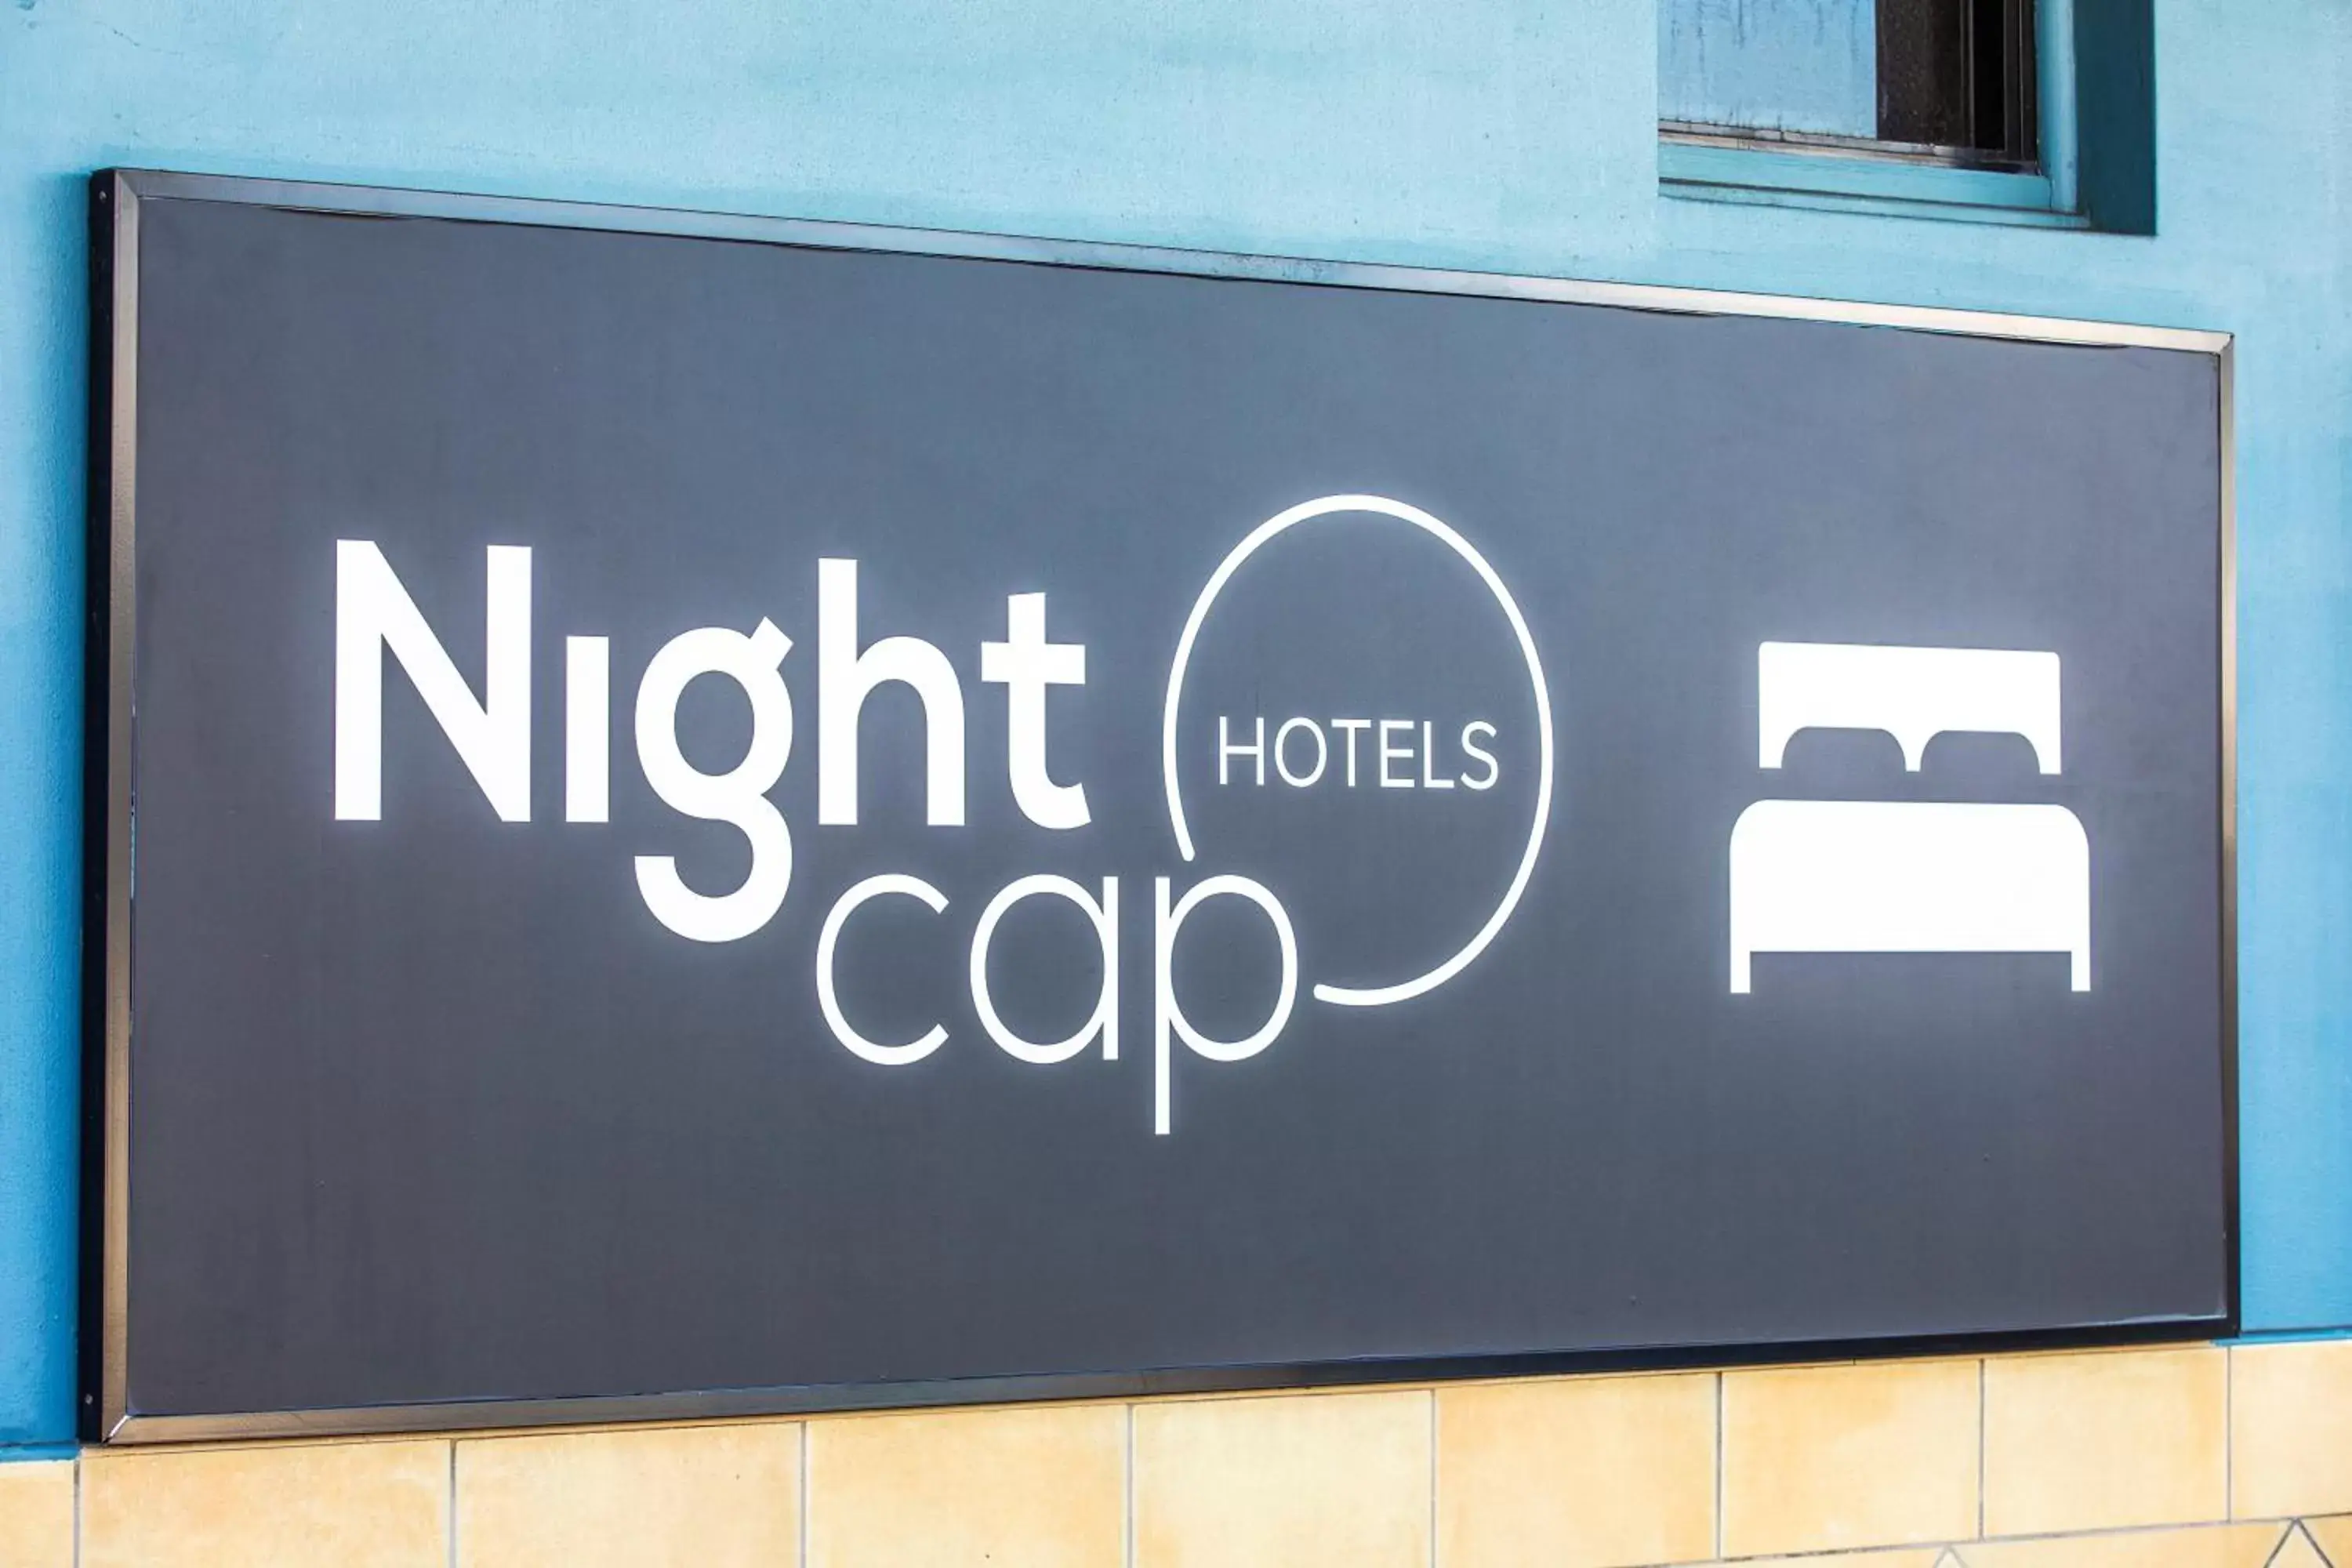 Property logo or sign in Nightcap at Ocean Beach Hotel